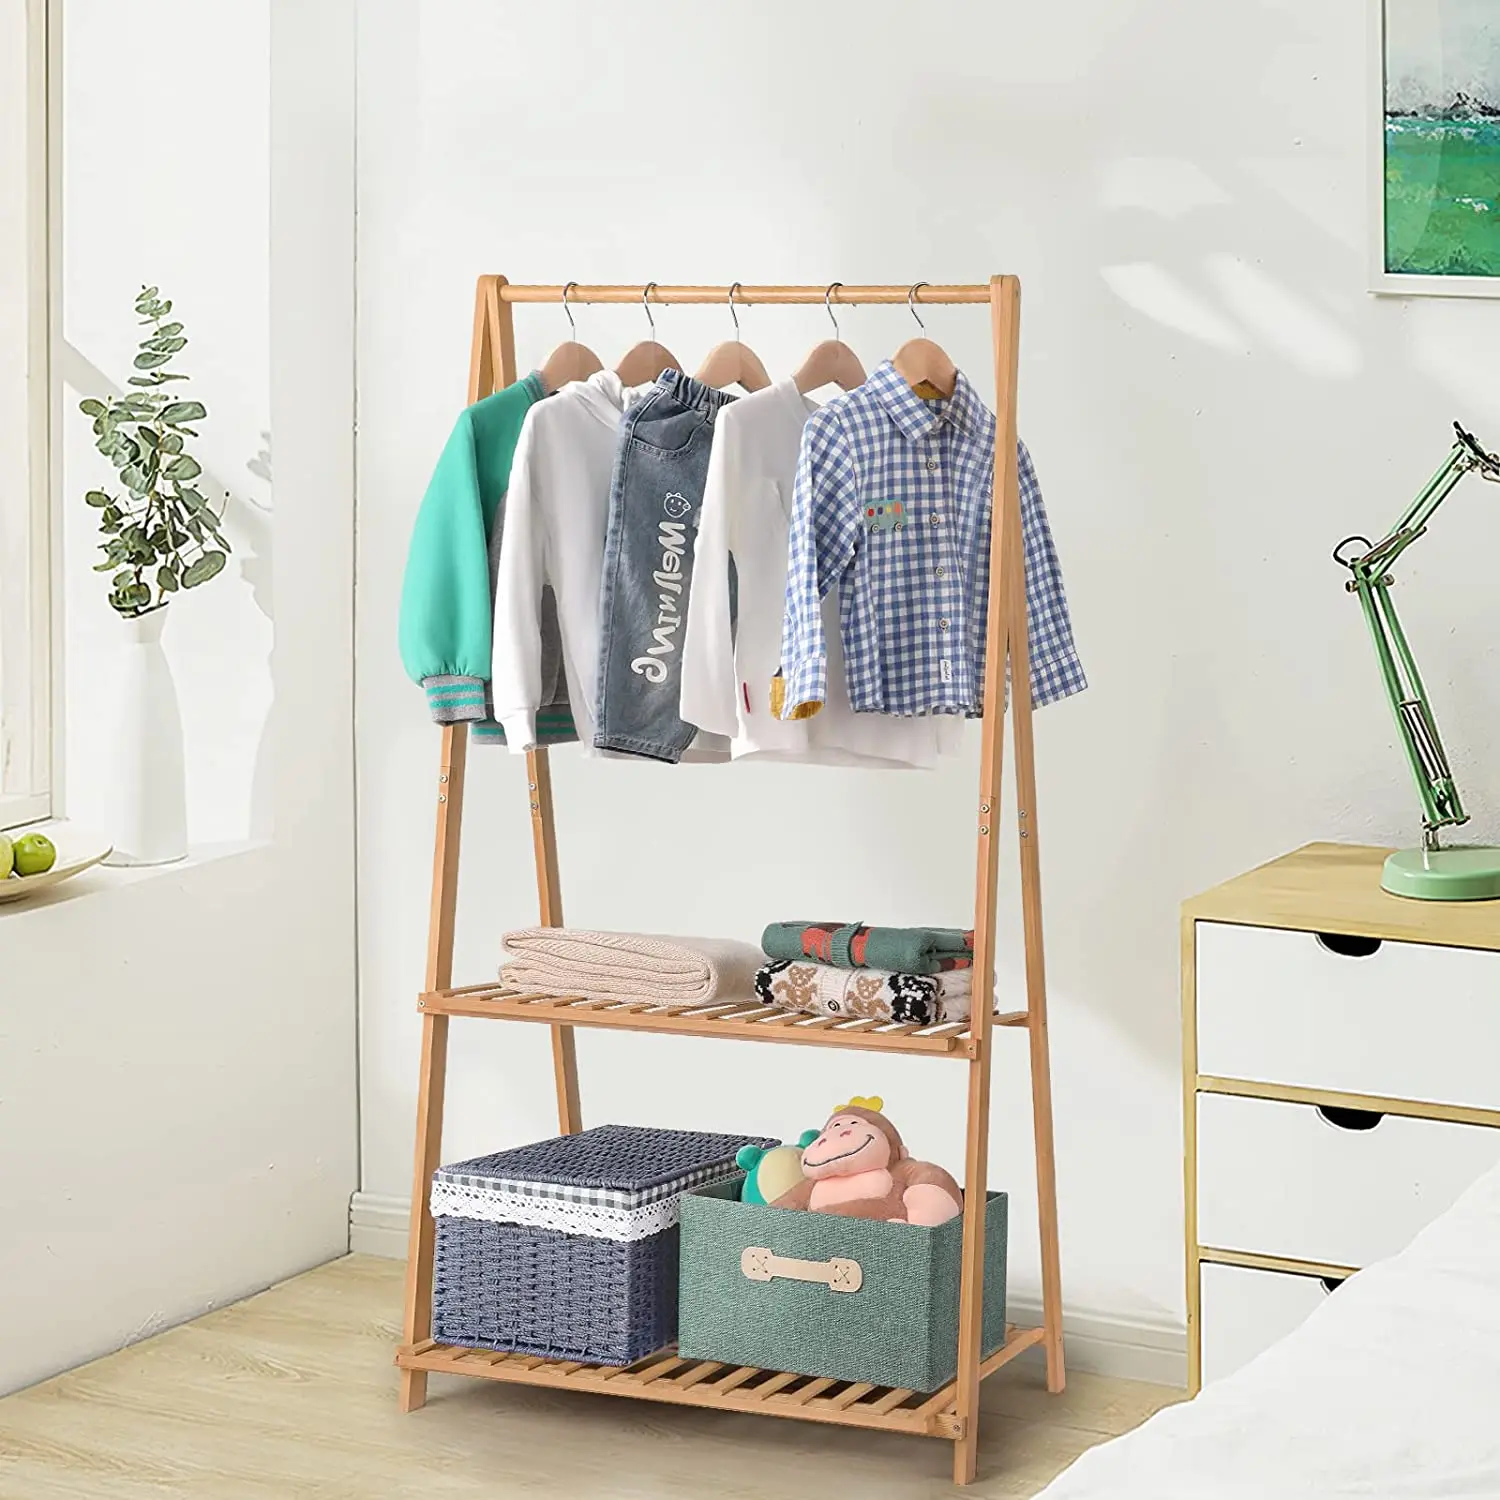 Bamboo Foldable Clothes Rack with Shelves Heavy Duty Clothing Garment Hanger for Bedroom,Livingroom,Dorm